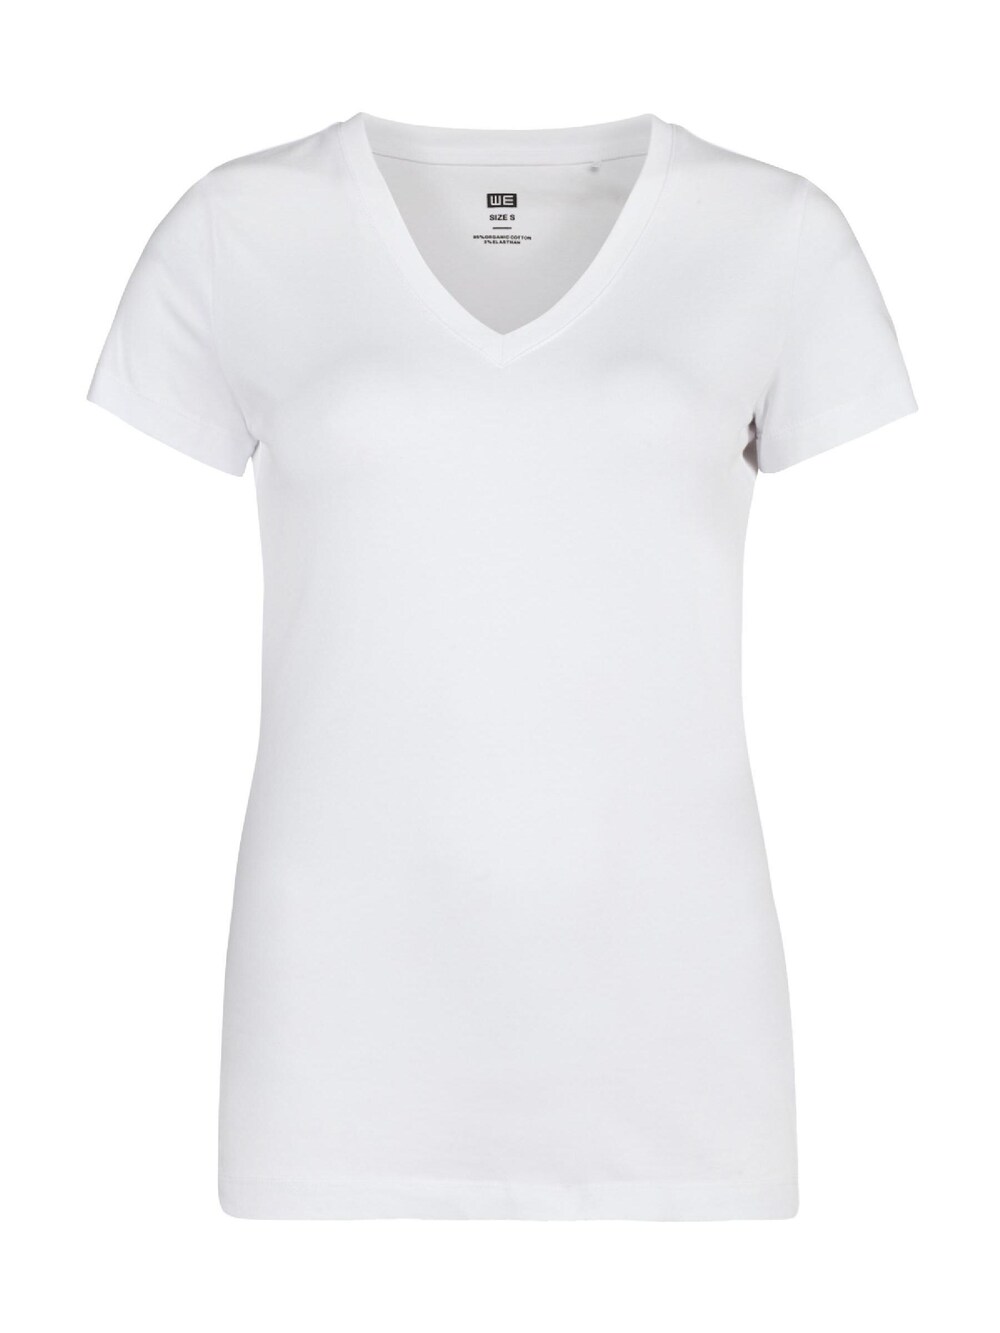 Рубашка WE Fashion, белый